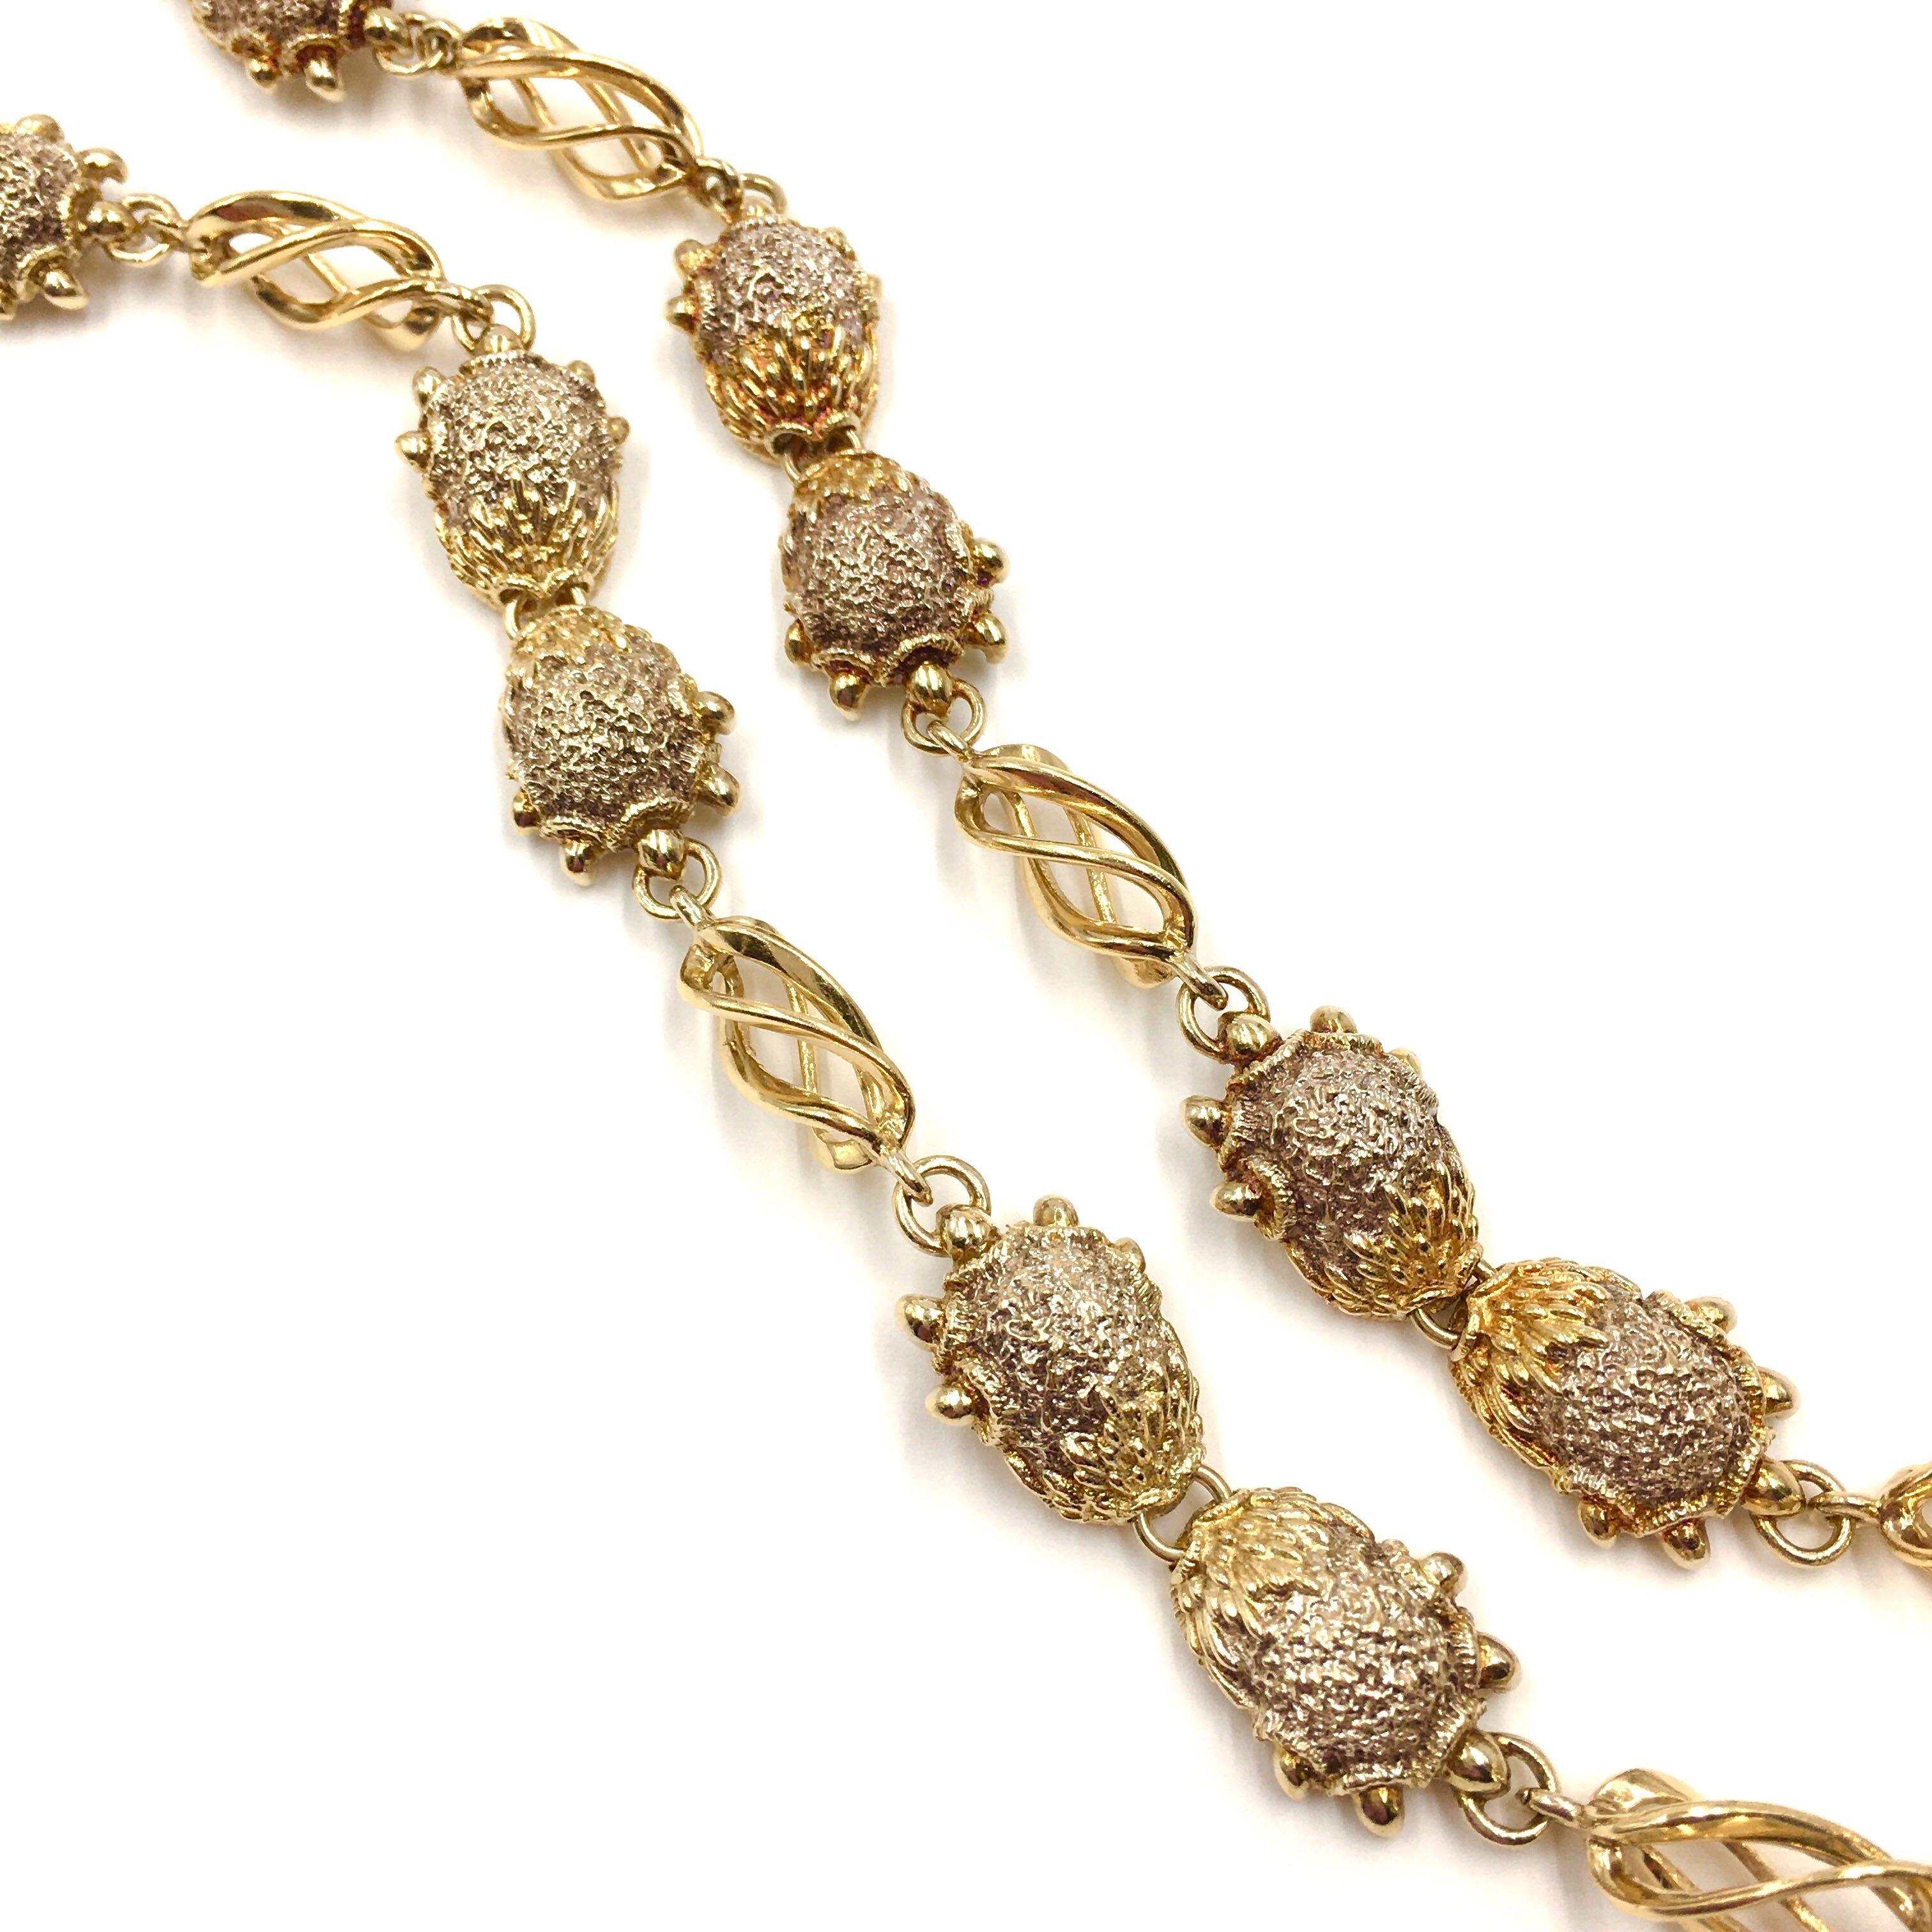 Round Cut Frascarolo 18 Karat Yellow Gold, Diamond and Emerald Necklace and Pendant